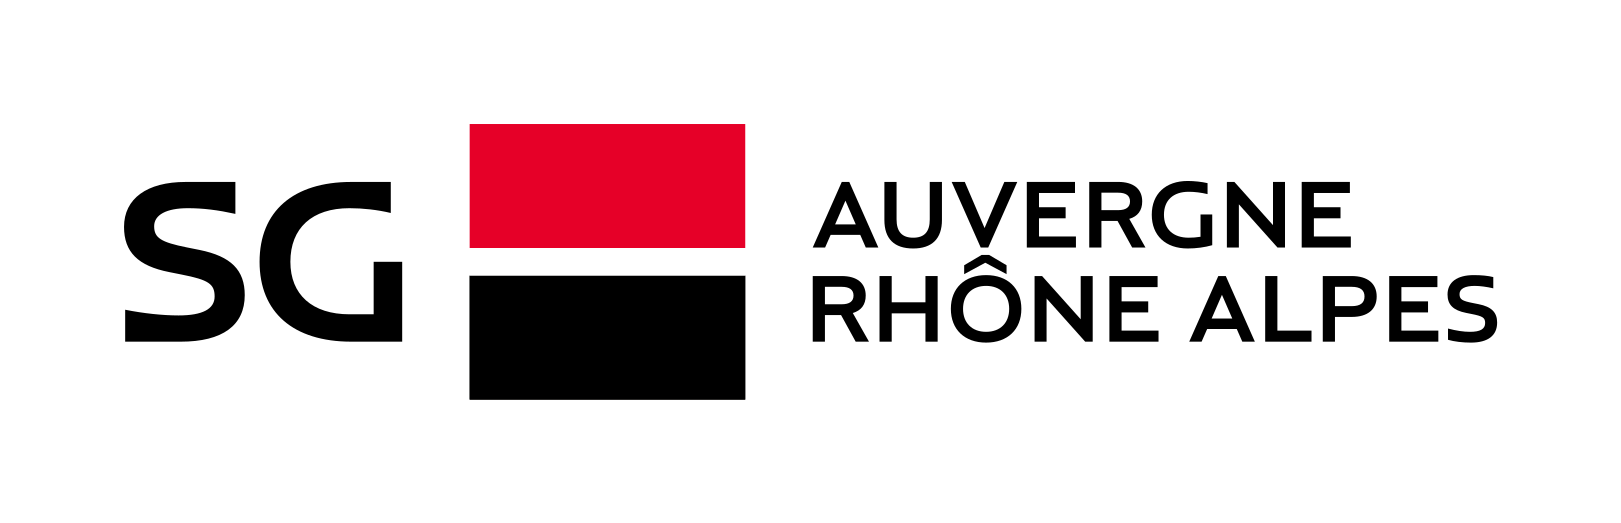 SG Auvergne Rhône Alpes